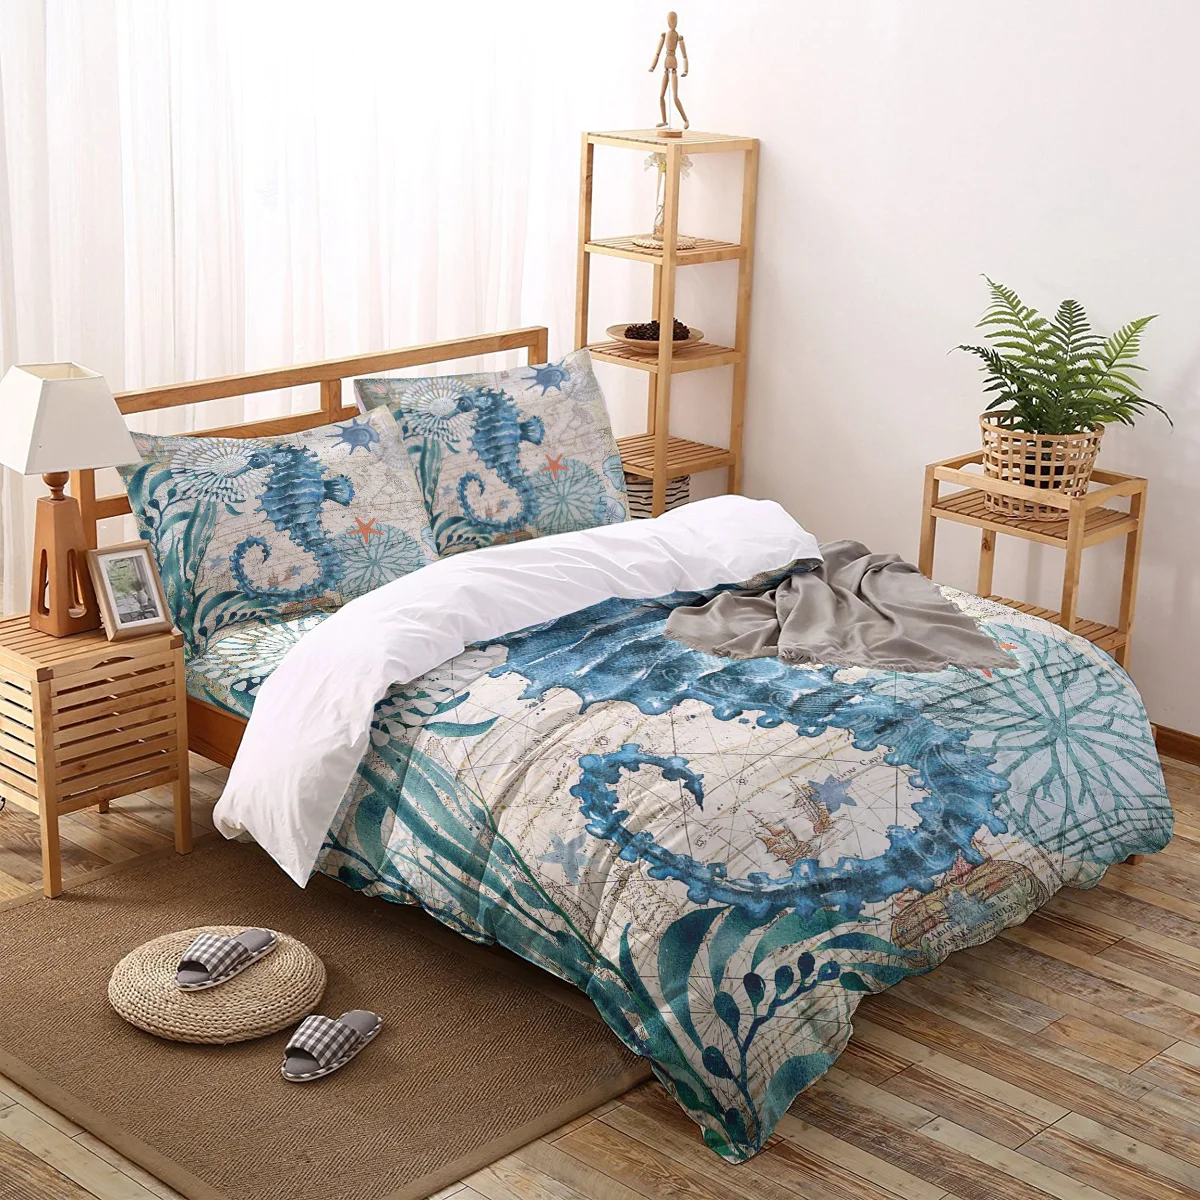 

Seahorse Ocean Creature Landscape Printed Comforter Bedding Set Duvet Cover Sets Pillowcases Bedclothes Bed Linen